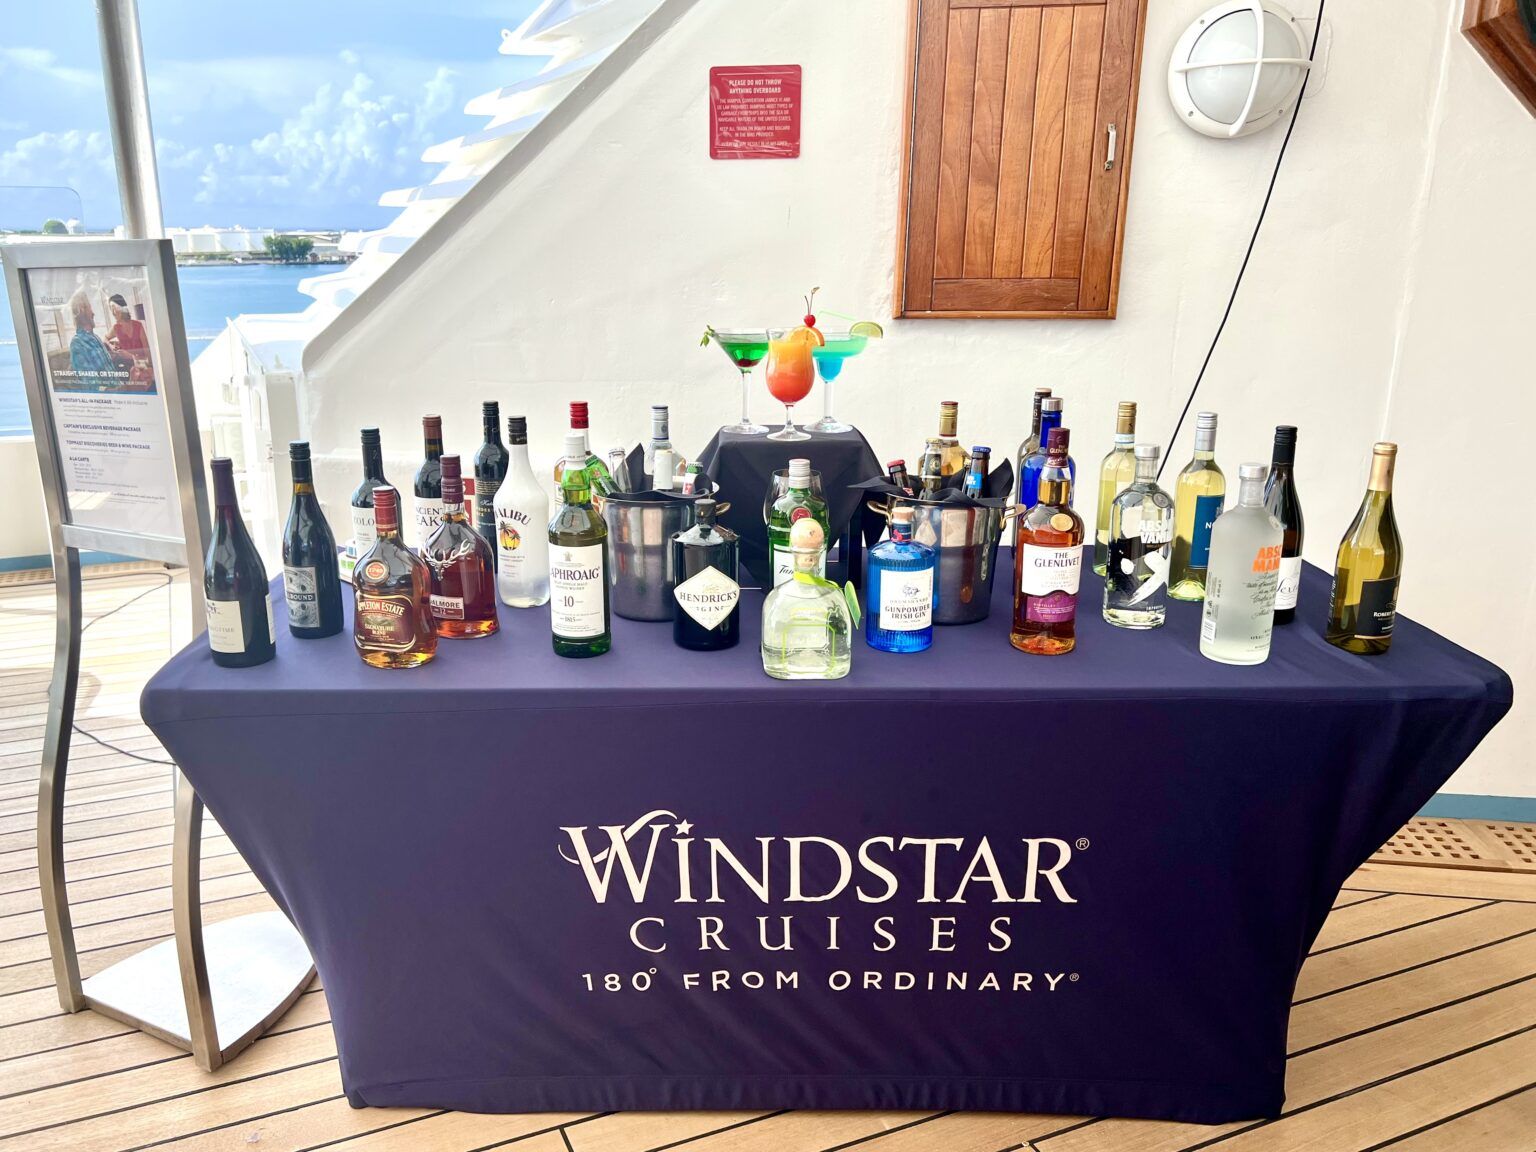 windstar cruises drinks package